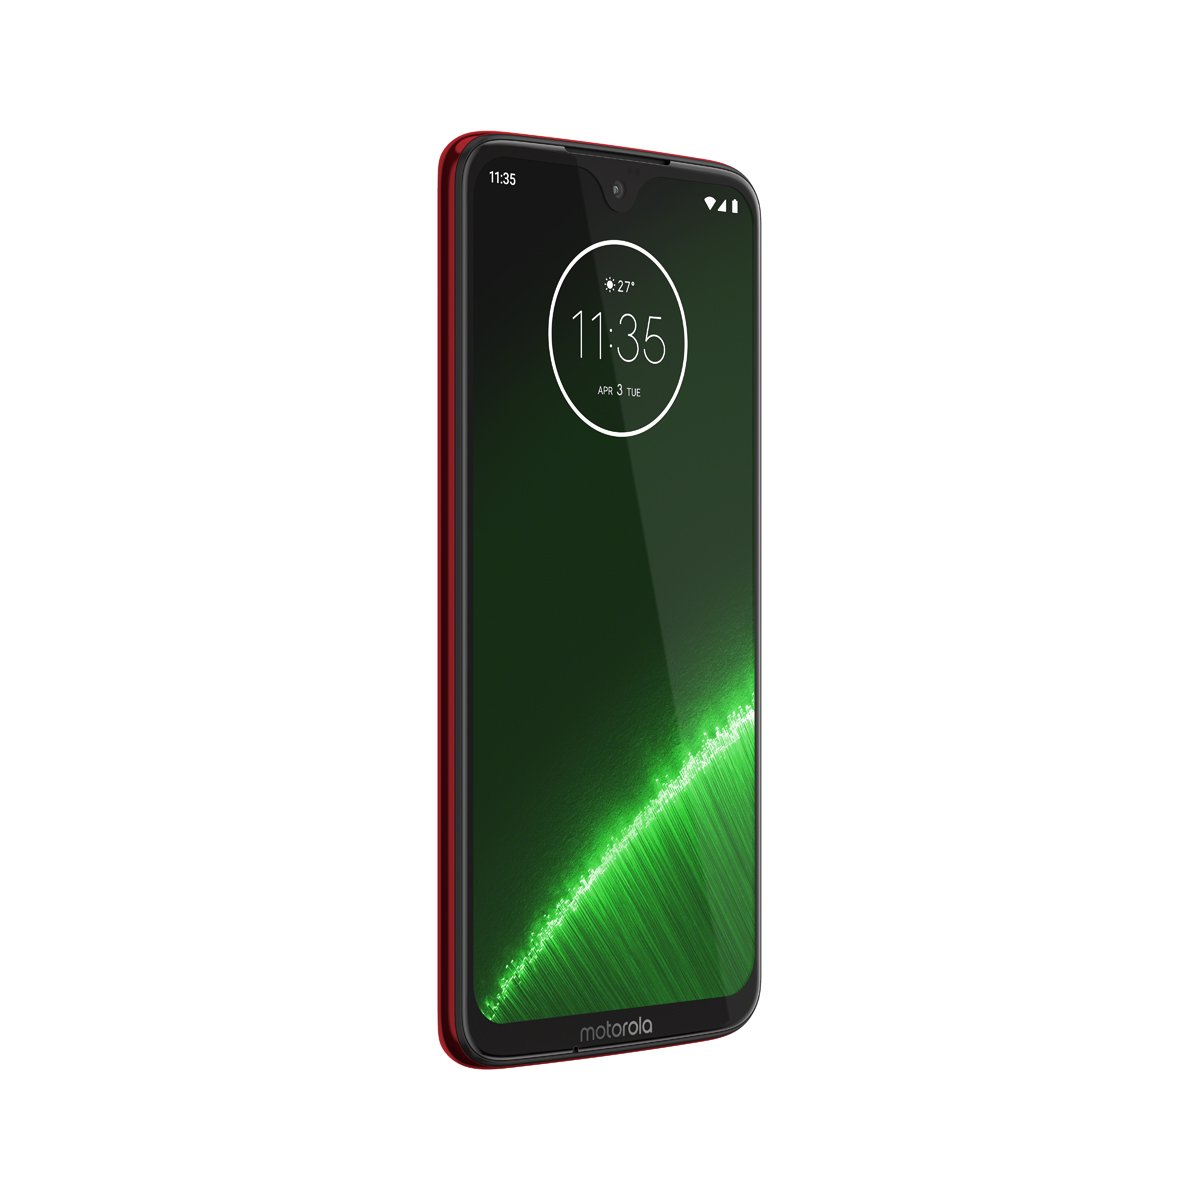 Motorola Moto G7 Plus specs, review, release date - PhonesData